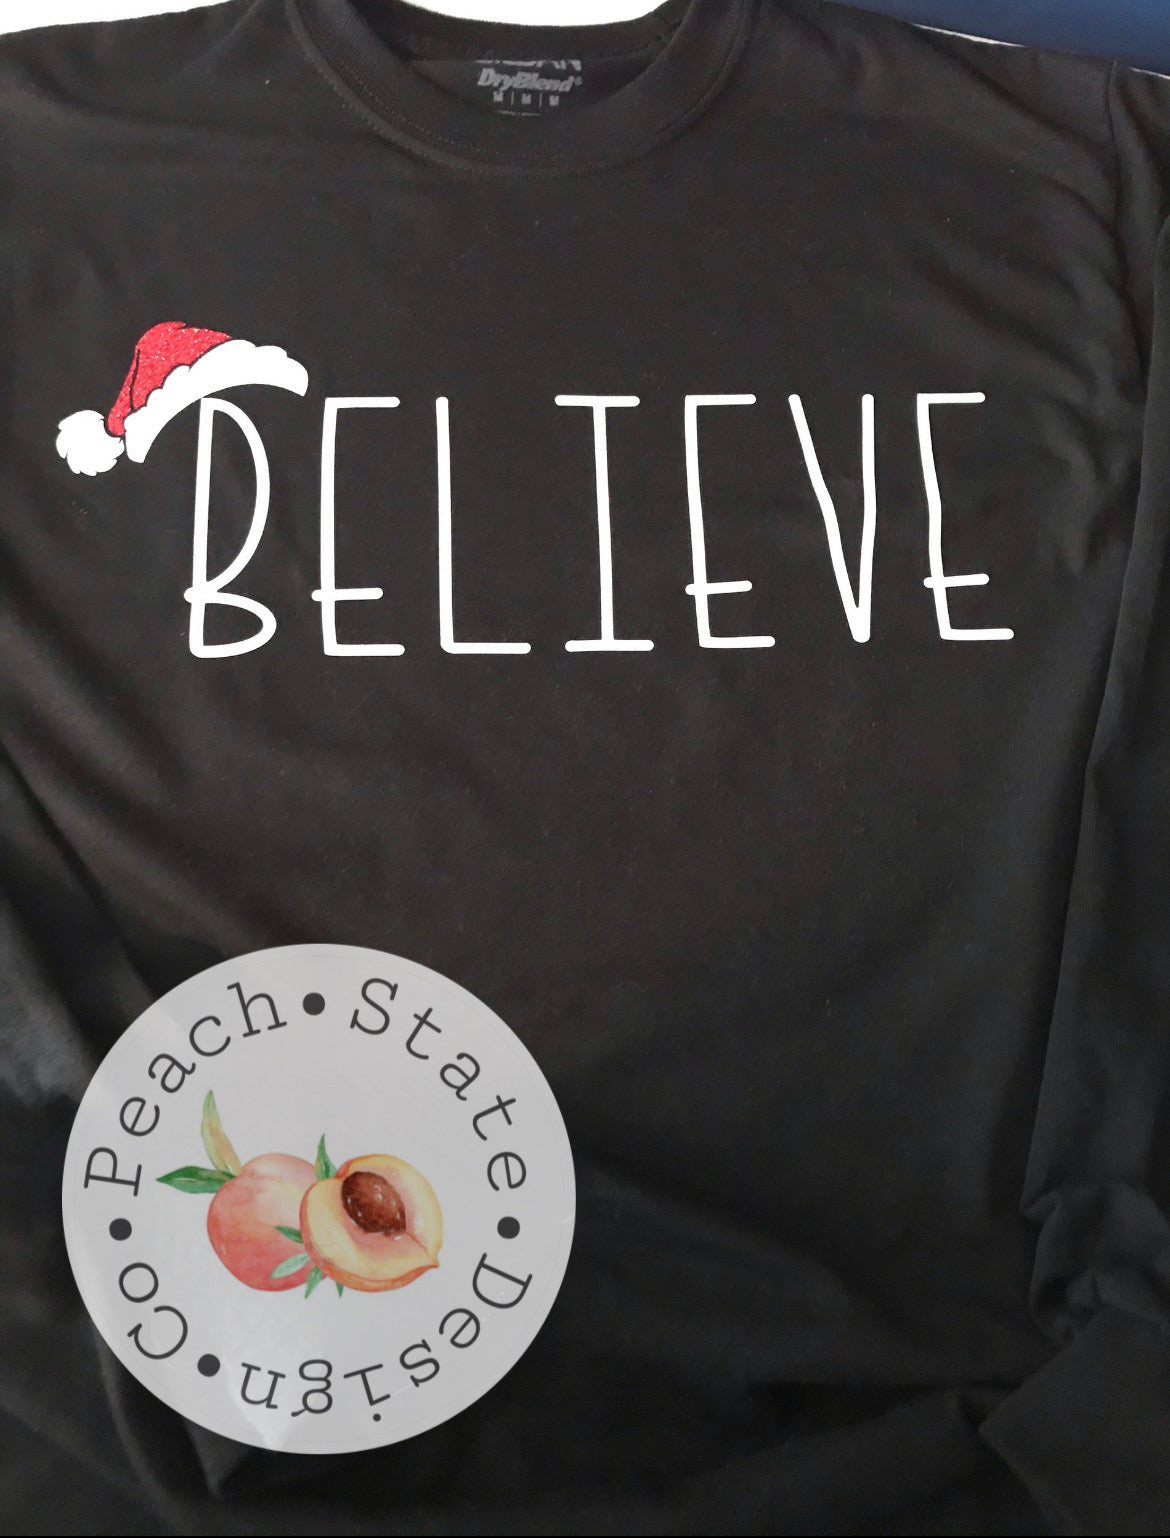 Believe shirt with Glitter Santa hat